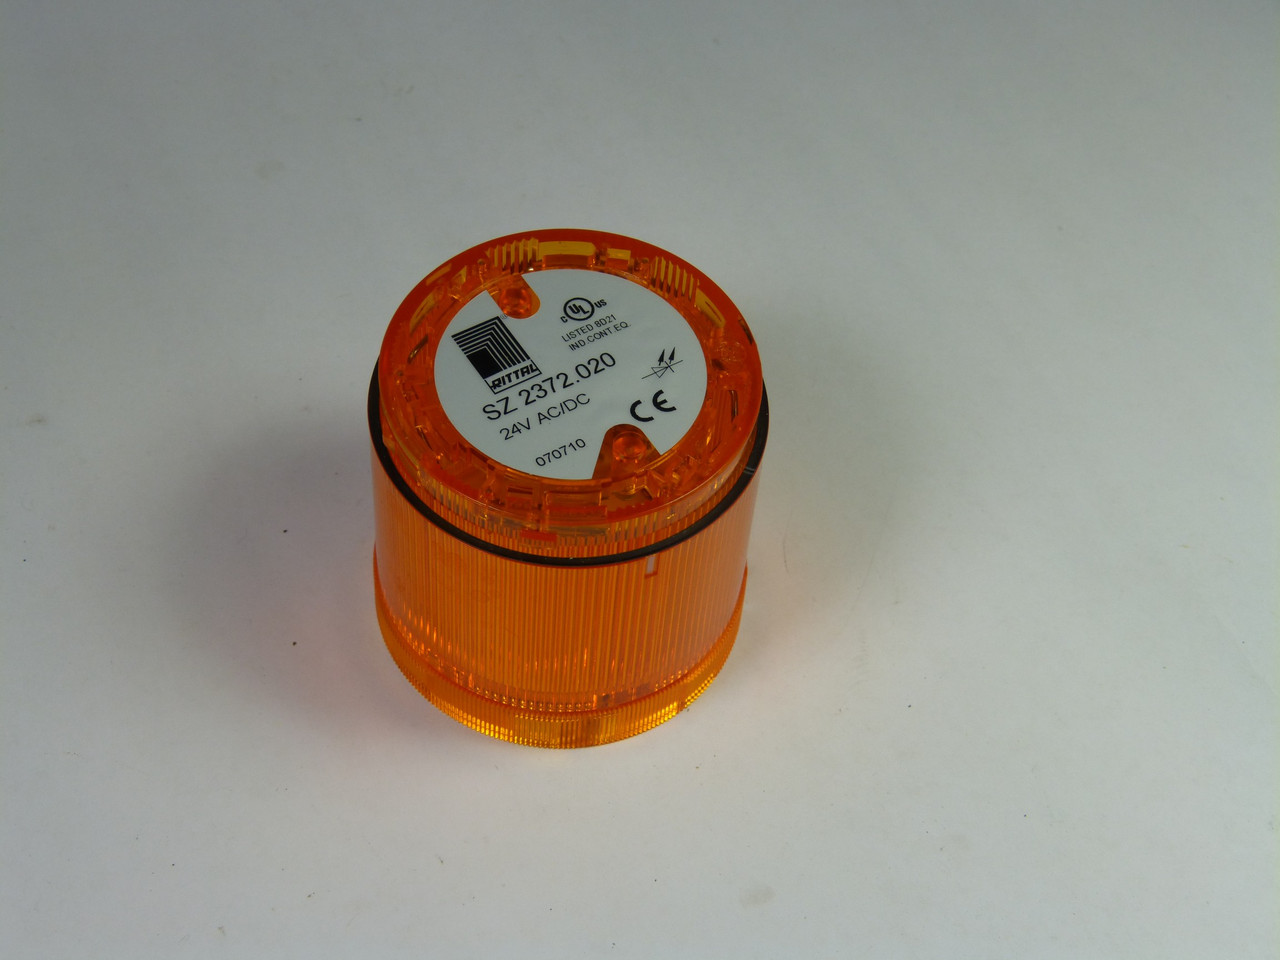 Rittal SZ-2372-020 Signal Stack Light 24Vac/Dc Orange USED